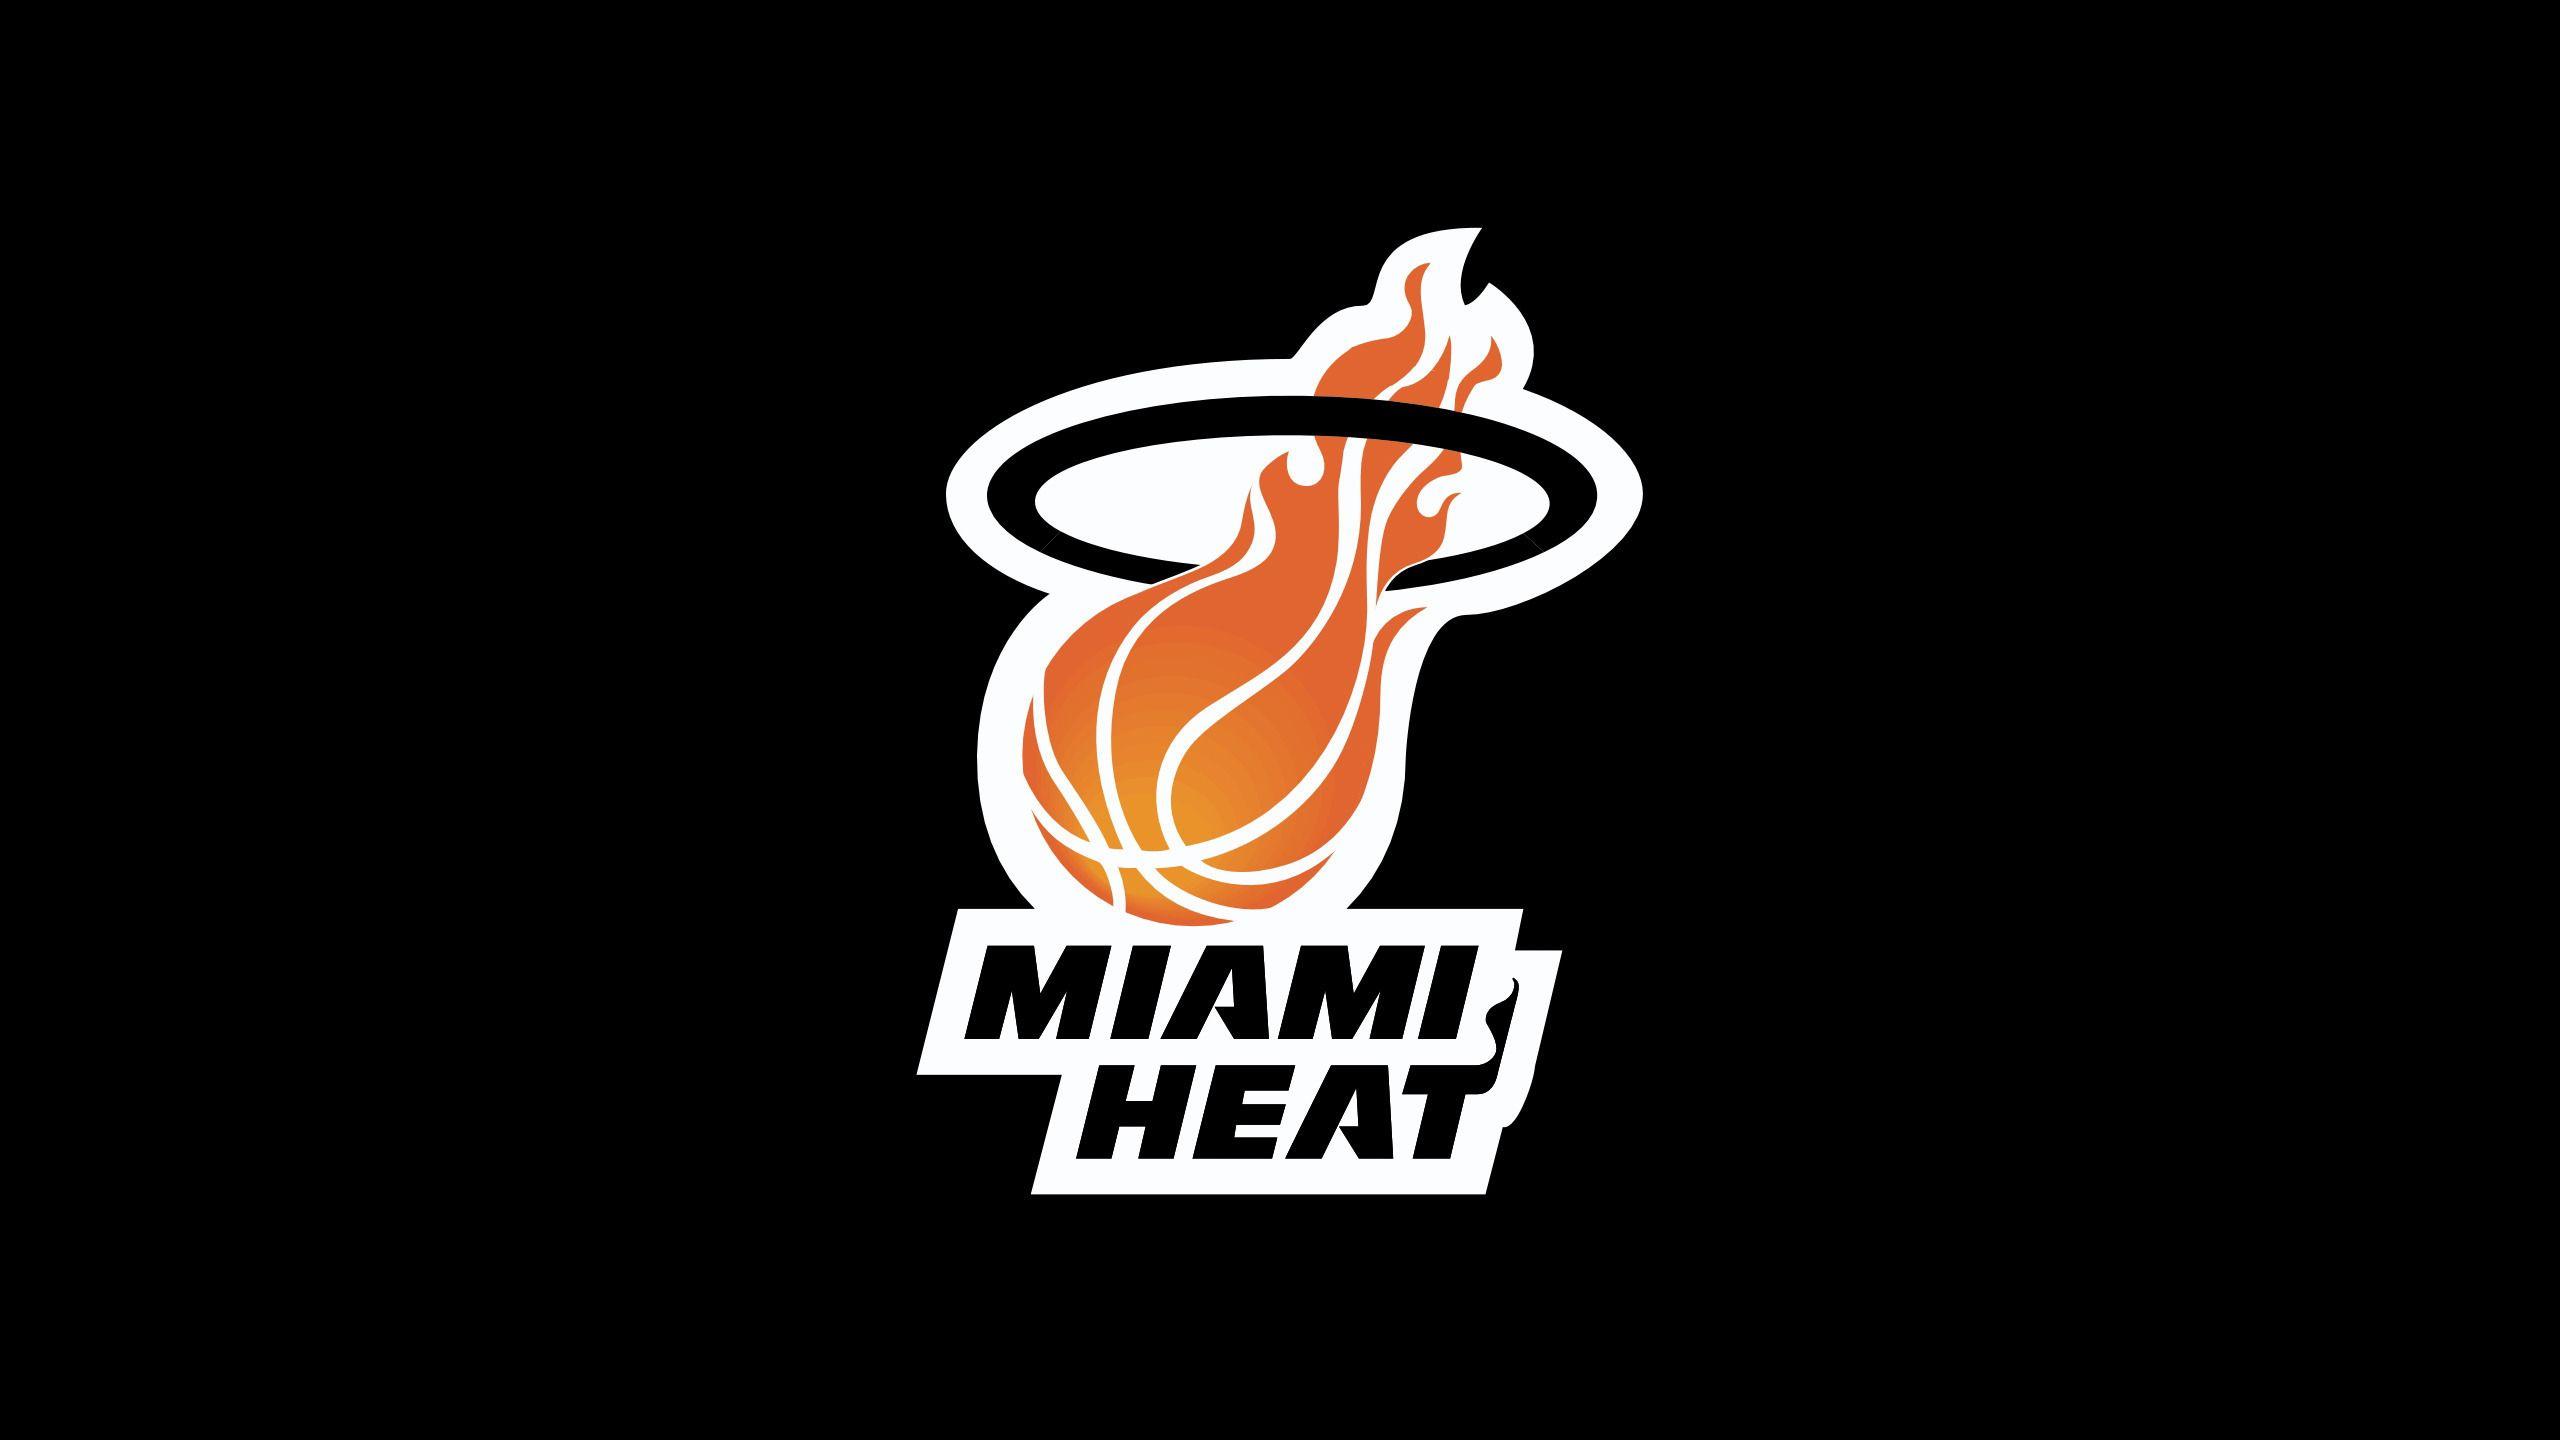 NBA Miami Heat Team Logo Black wallpapers HD 2016 in Basketball